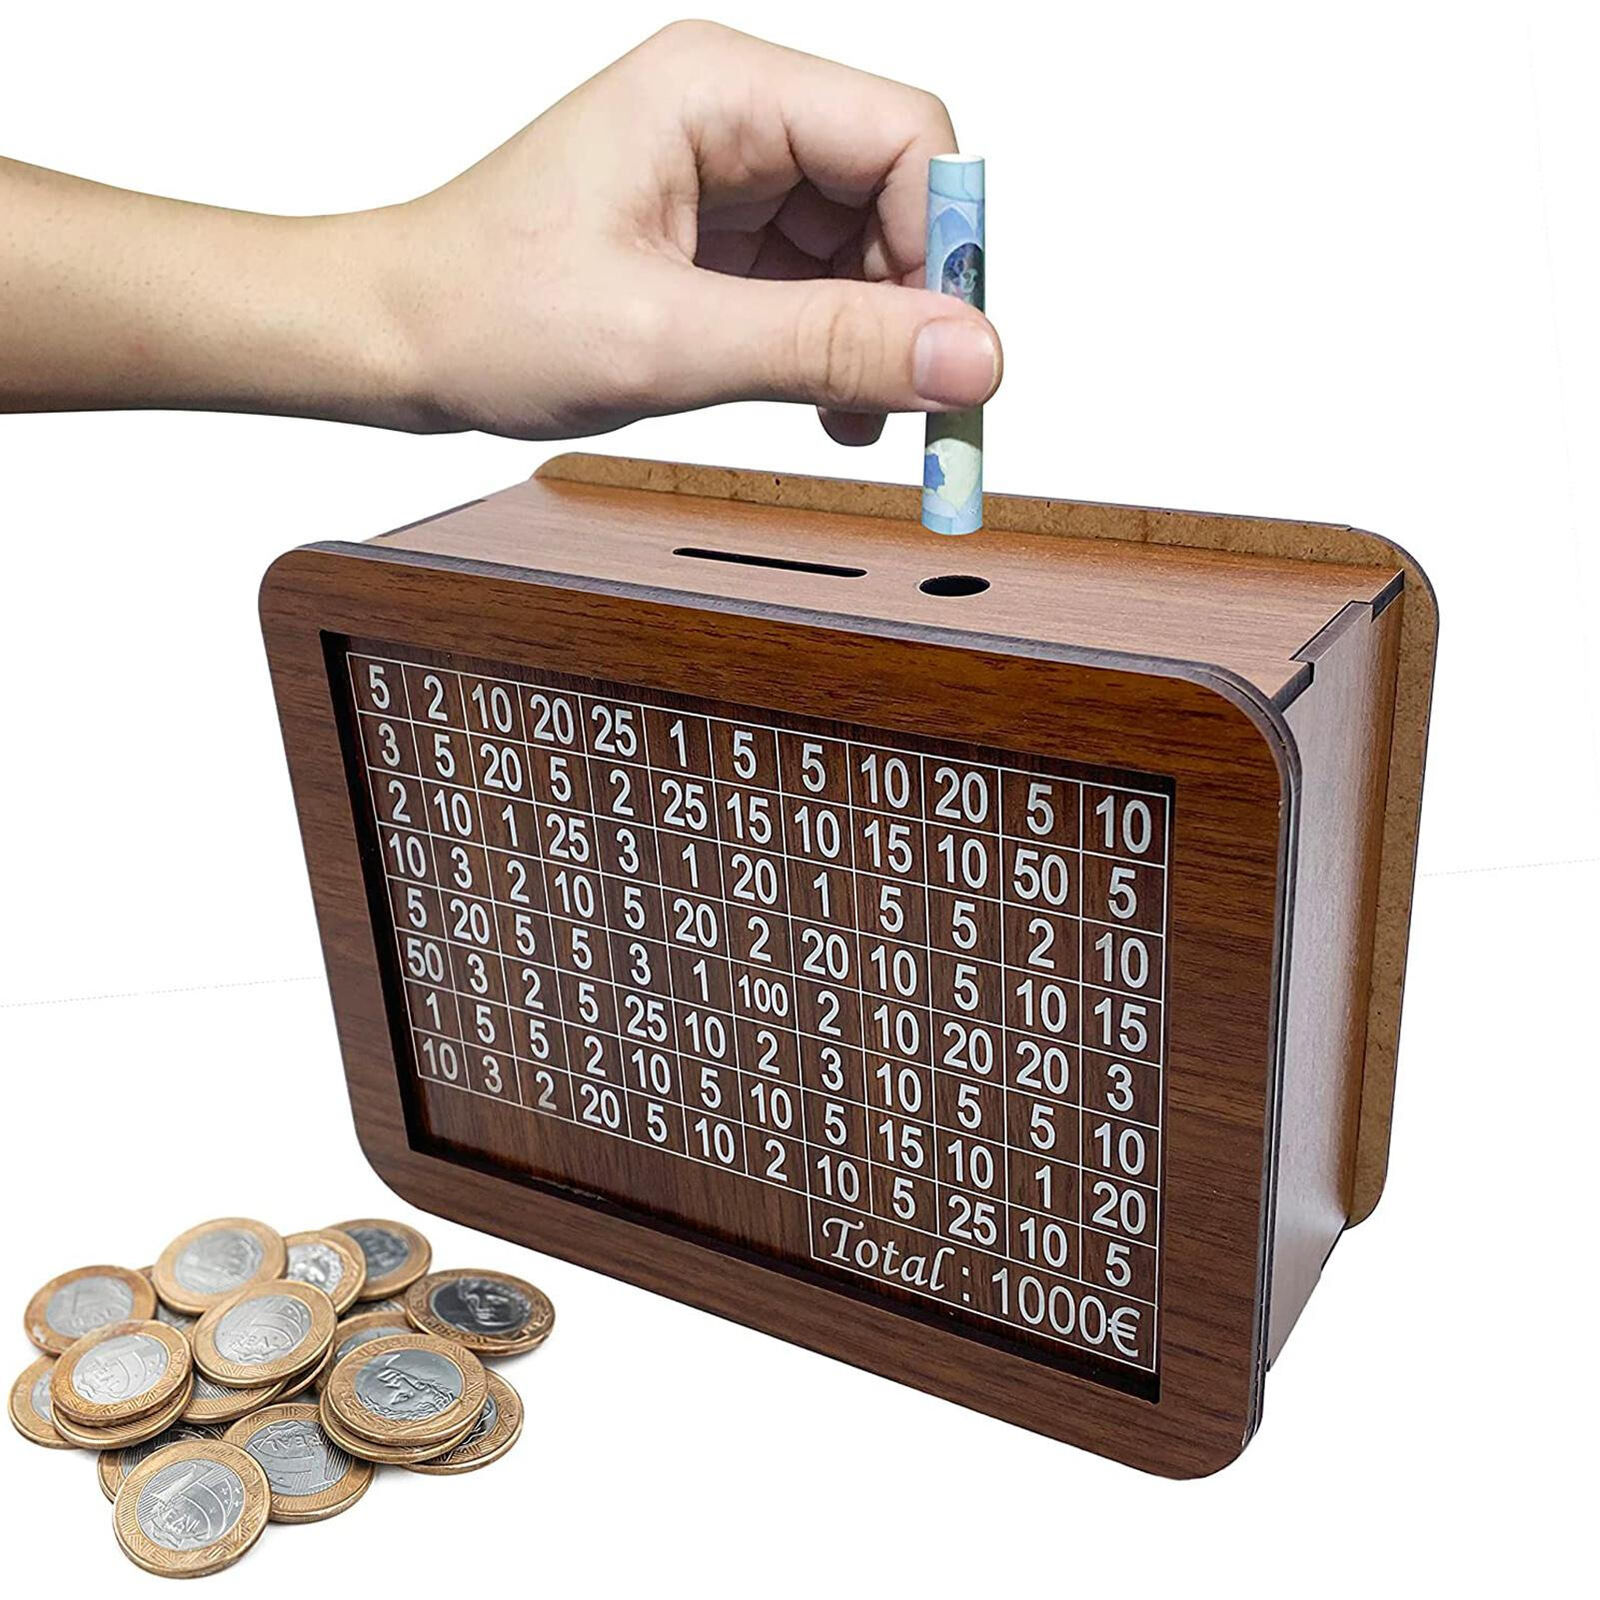 Retro Wooden Money Box-Wooden Piggy Bank With Counter-MoneyBox Crafts Home Decor